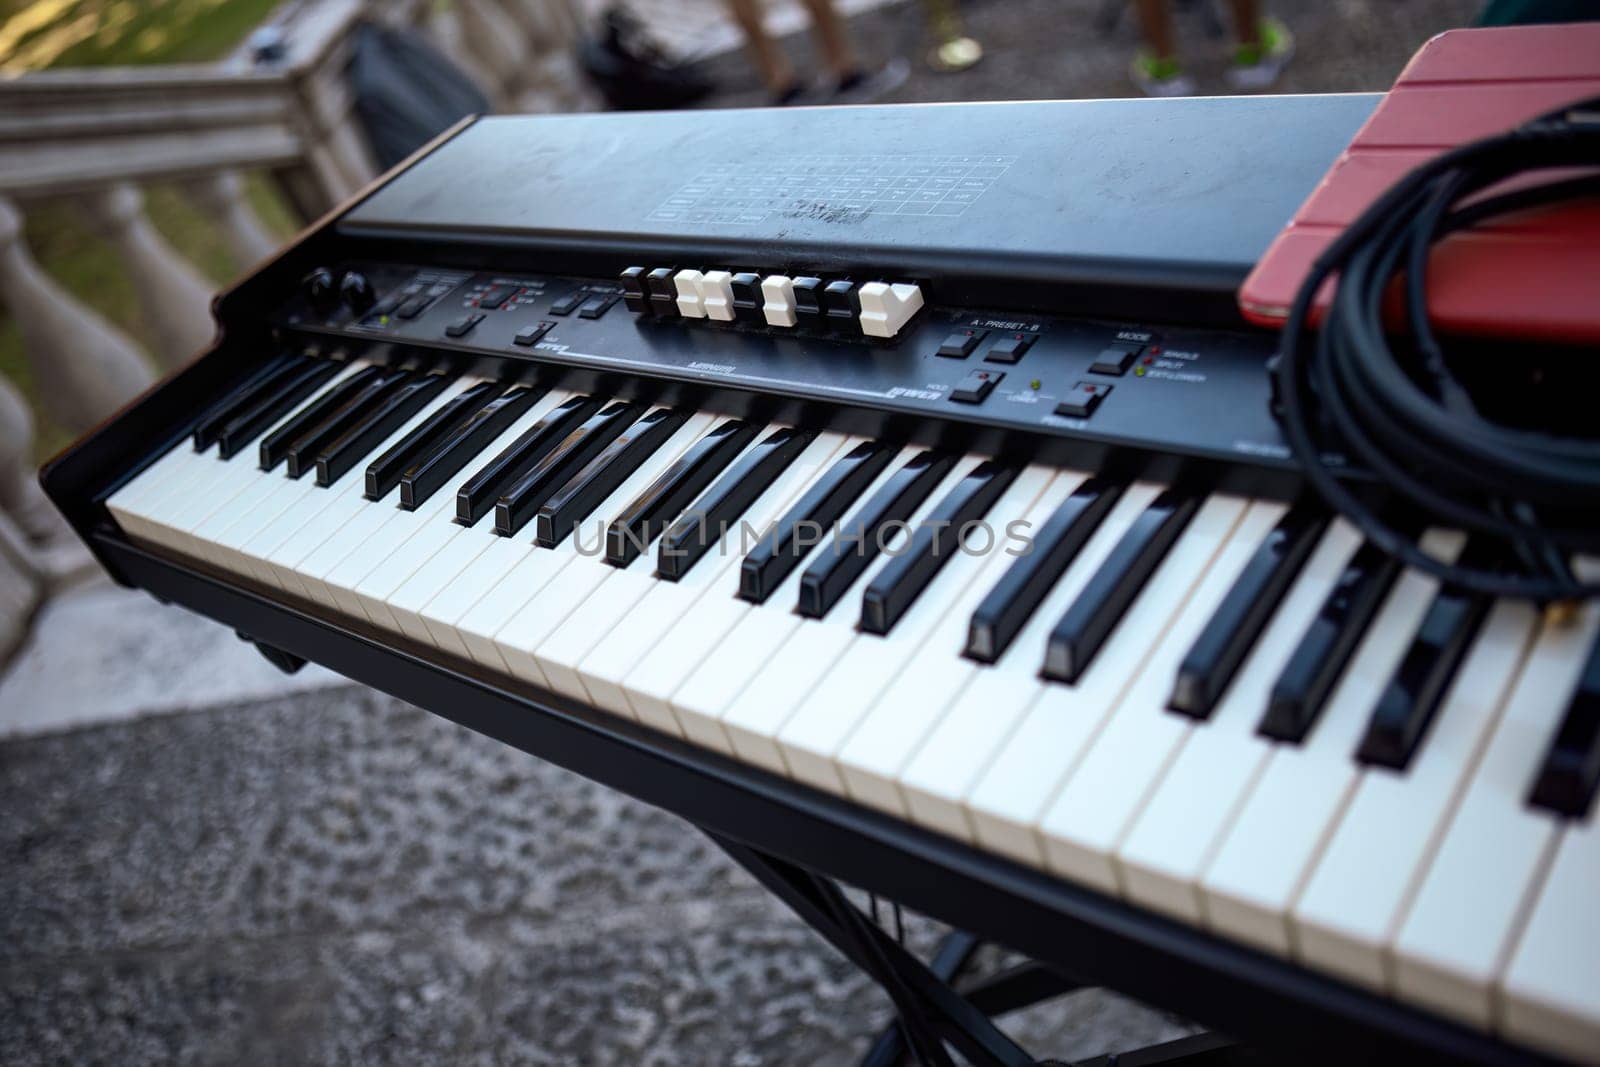 Keyboard Set for Live Concert by pippocarlot